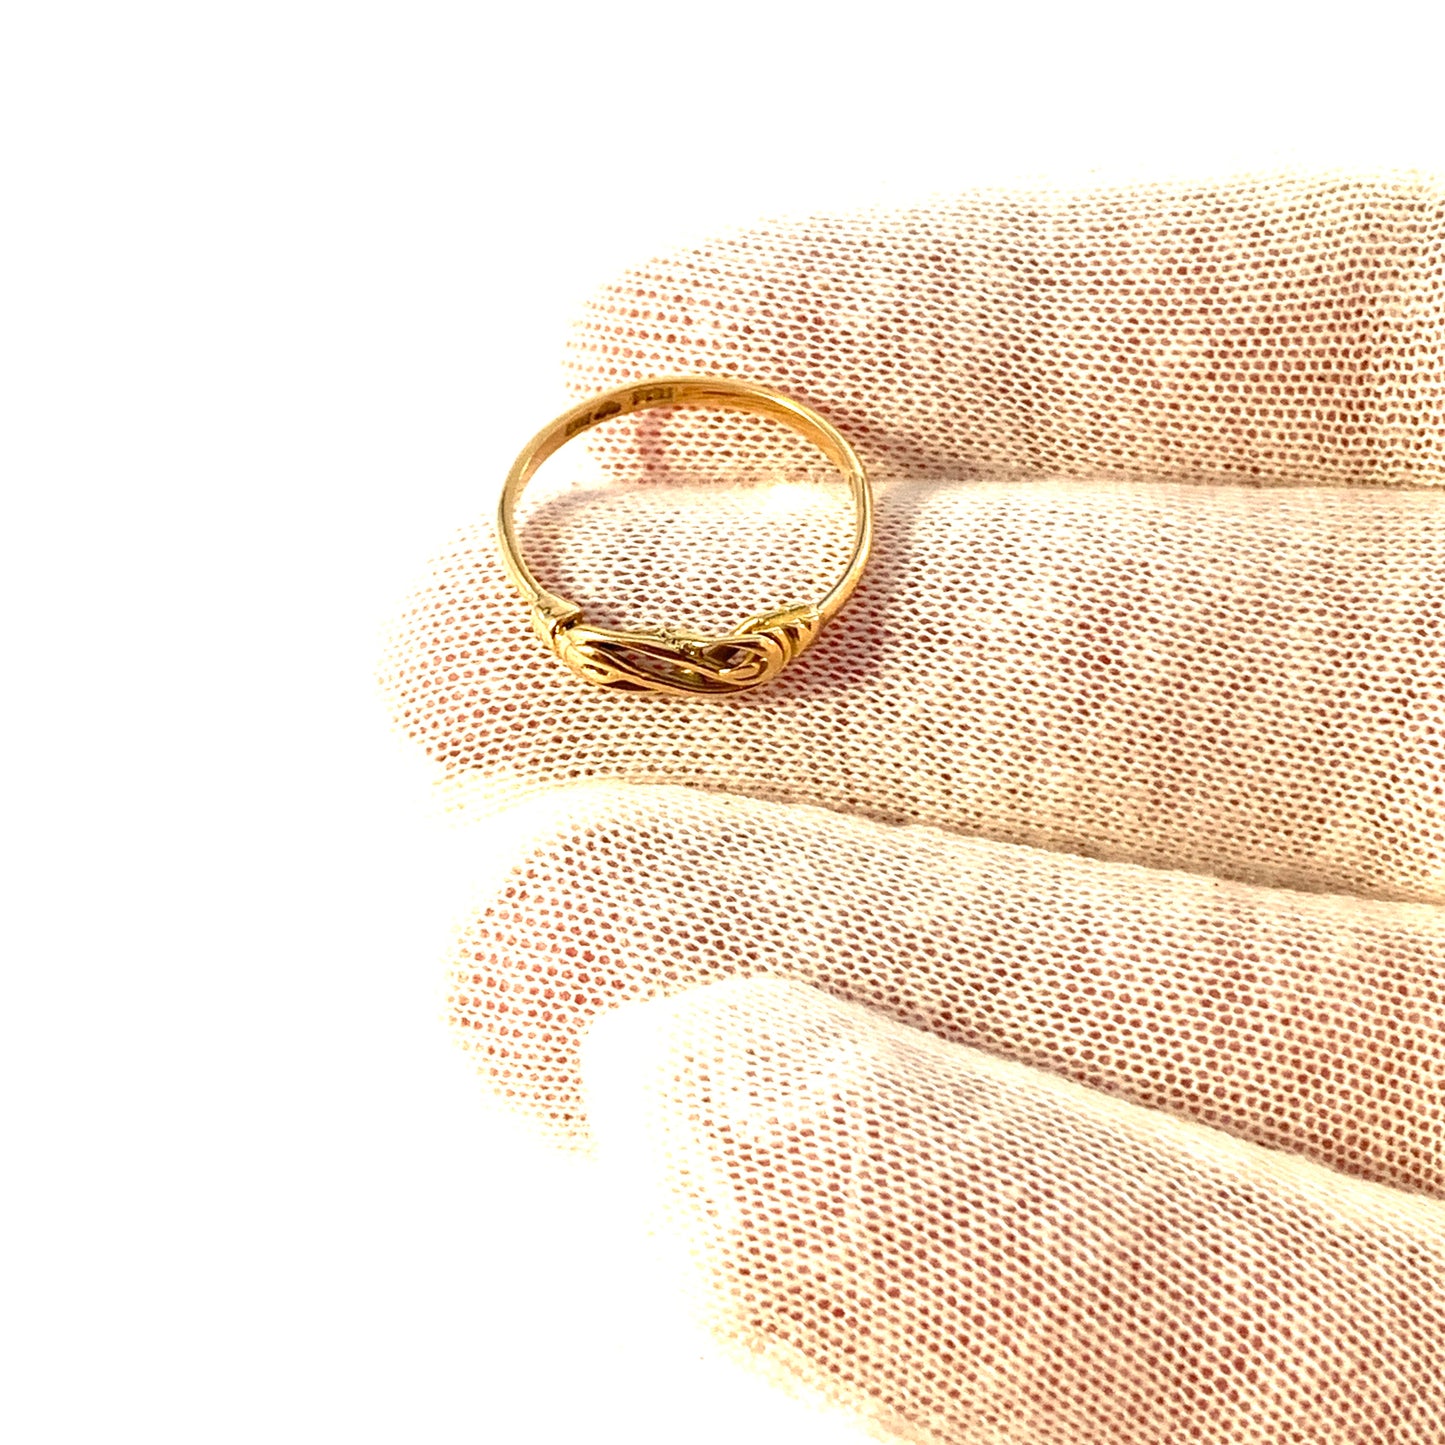 G Dahlgren, Sweden 1922. Antique Art Nouveau 18k Gold Ring.